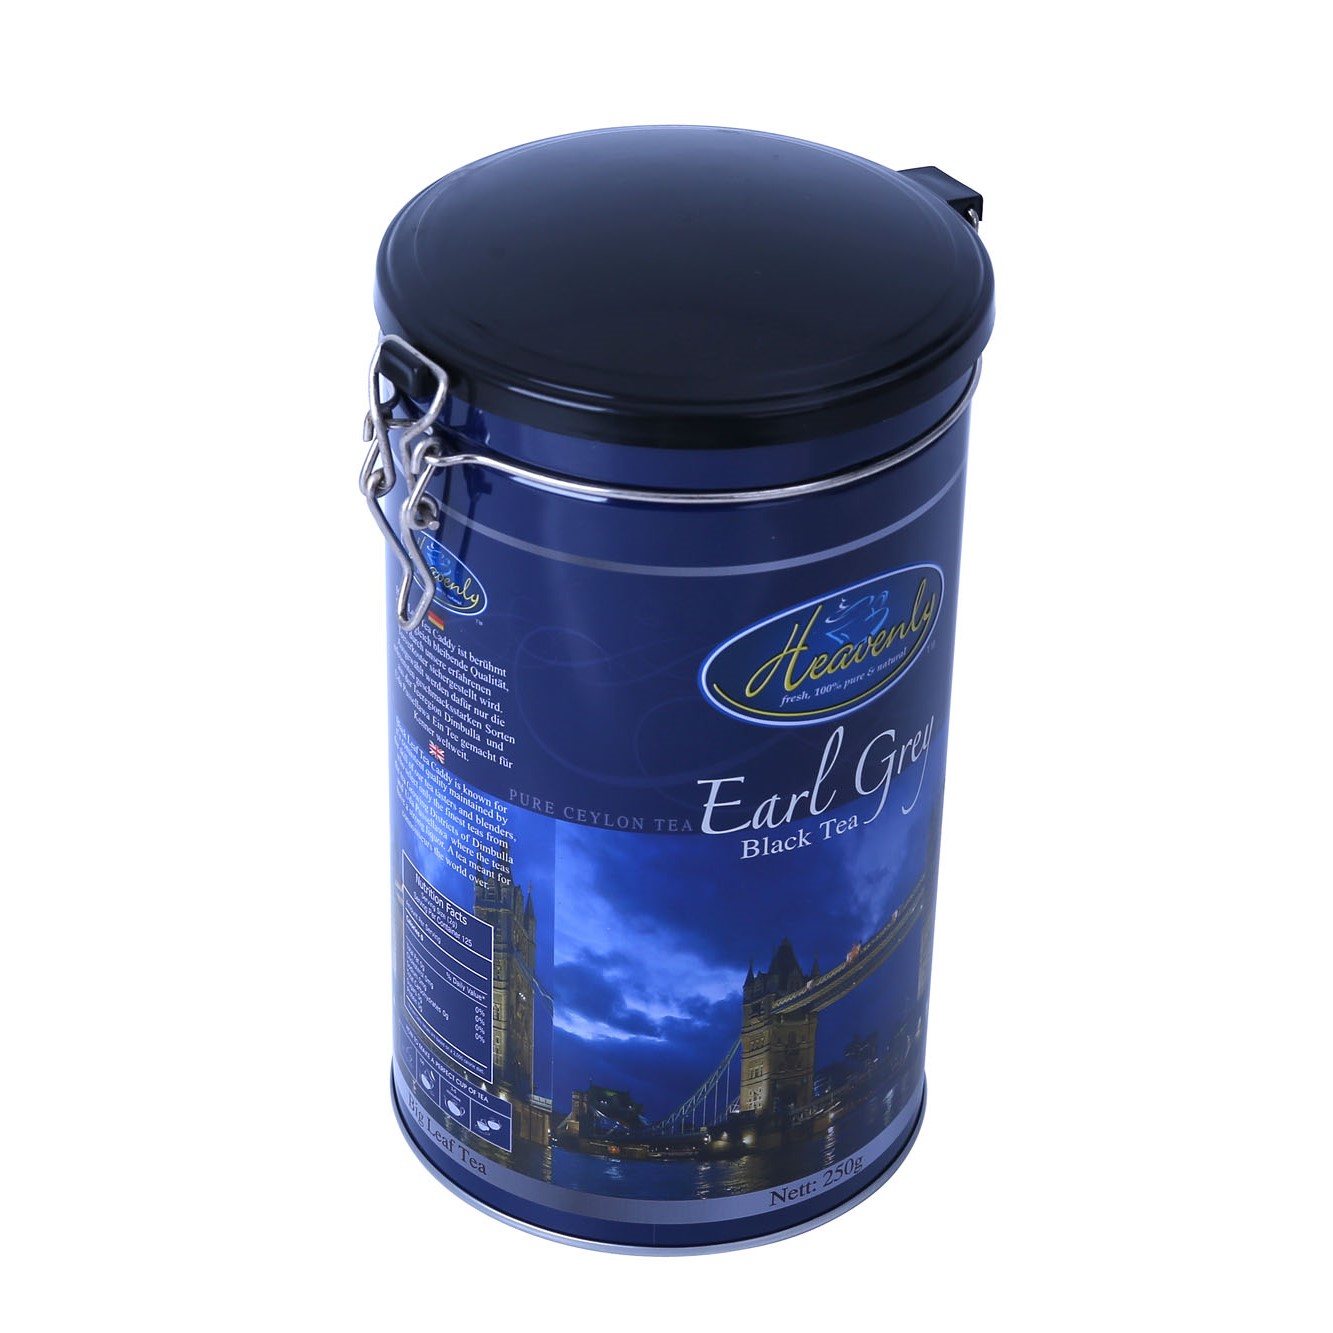 Food grade customized printing empty meta tea tin can 250g gift earl grey tea container packaging box